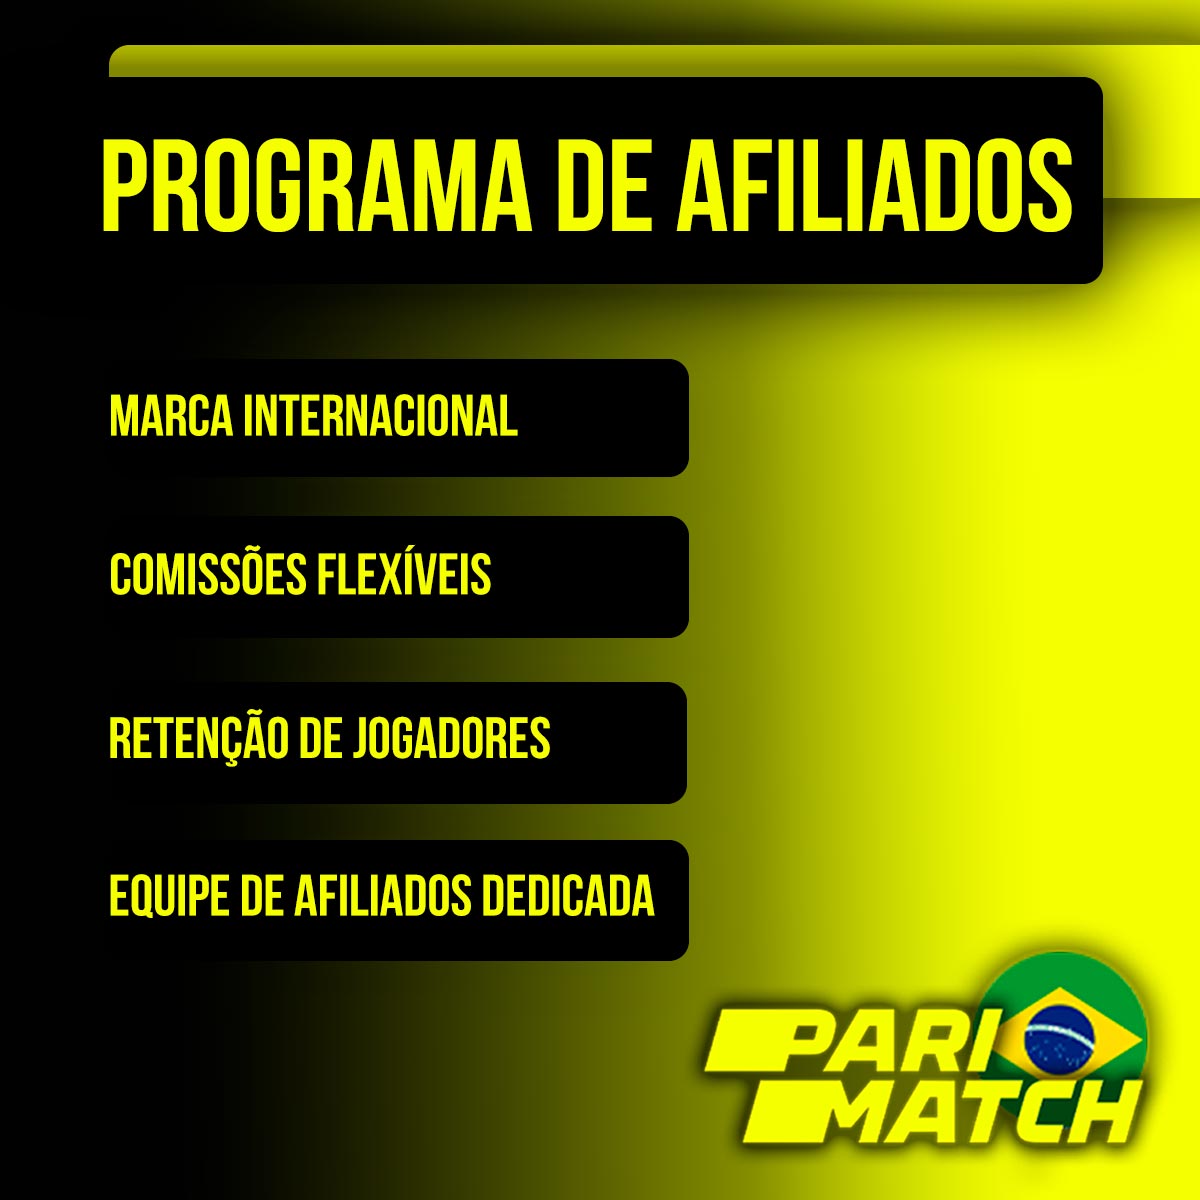 Programa de afiliados da Parimatch no mercado brasileiro de apostas